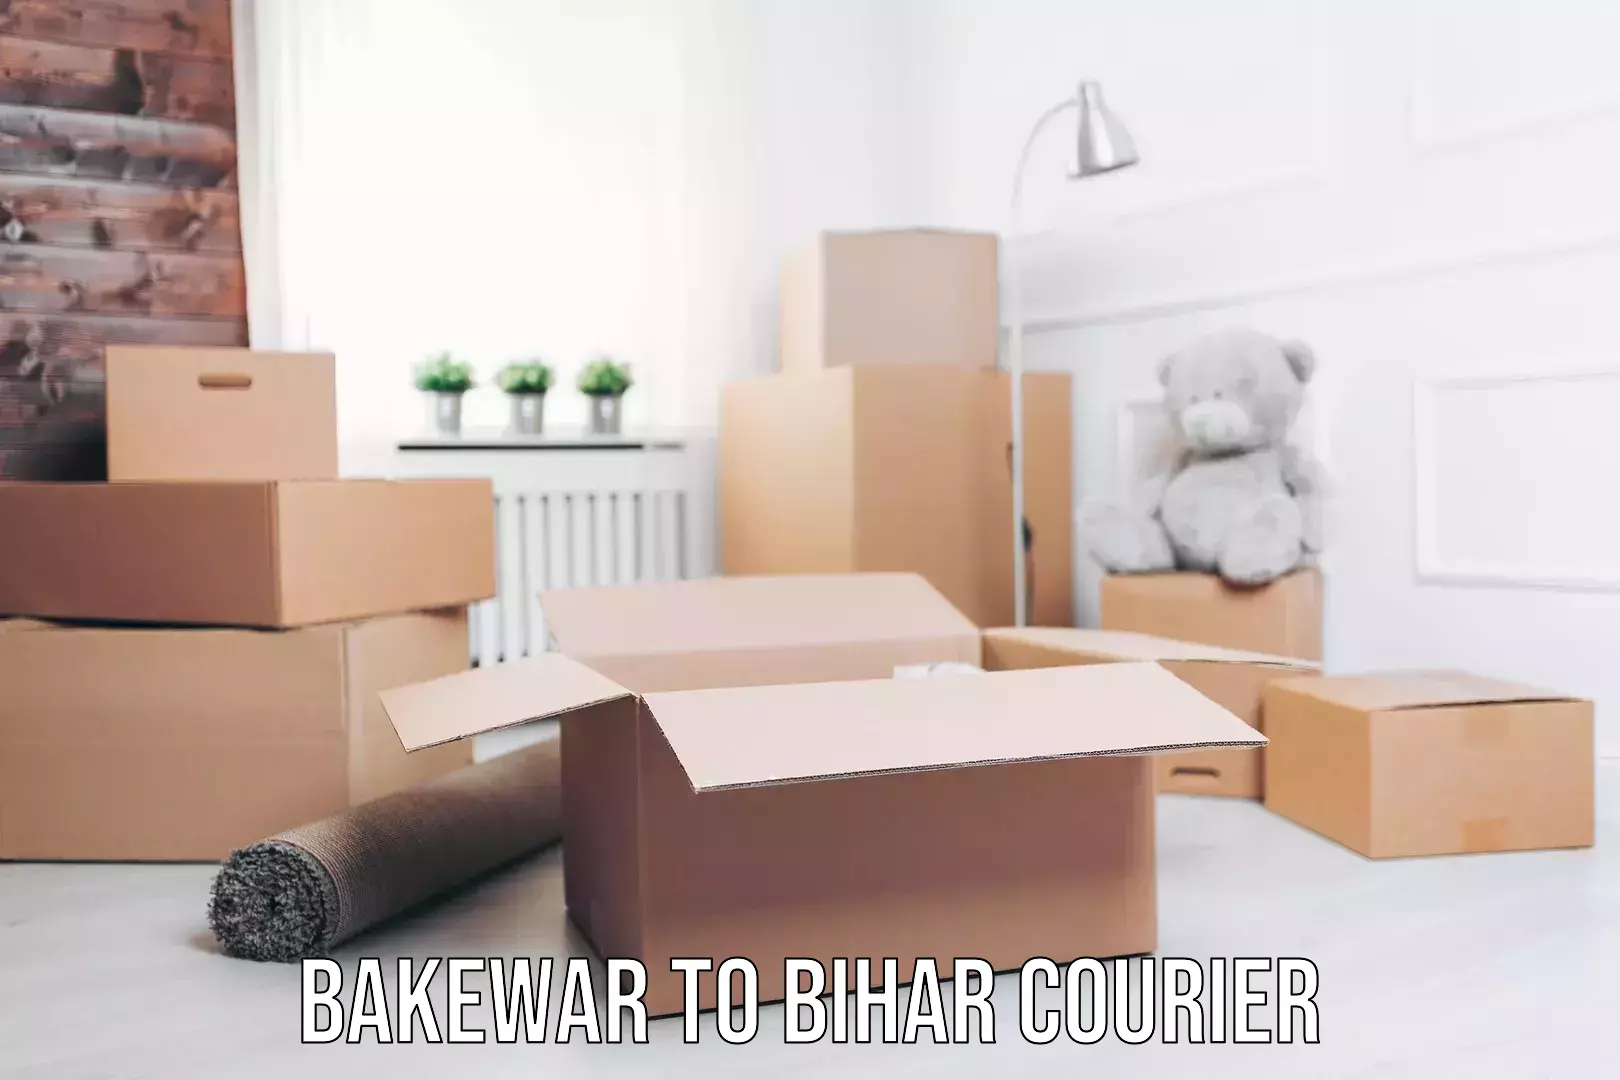 Quick dispatch service Bakewar to Bihar